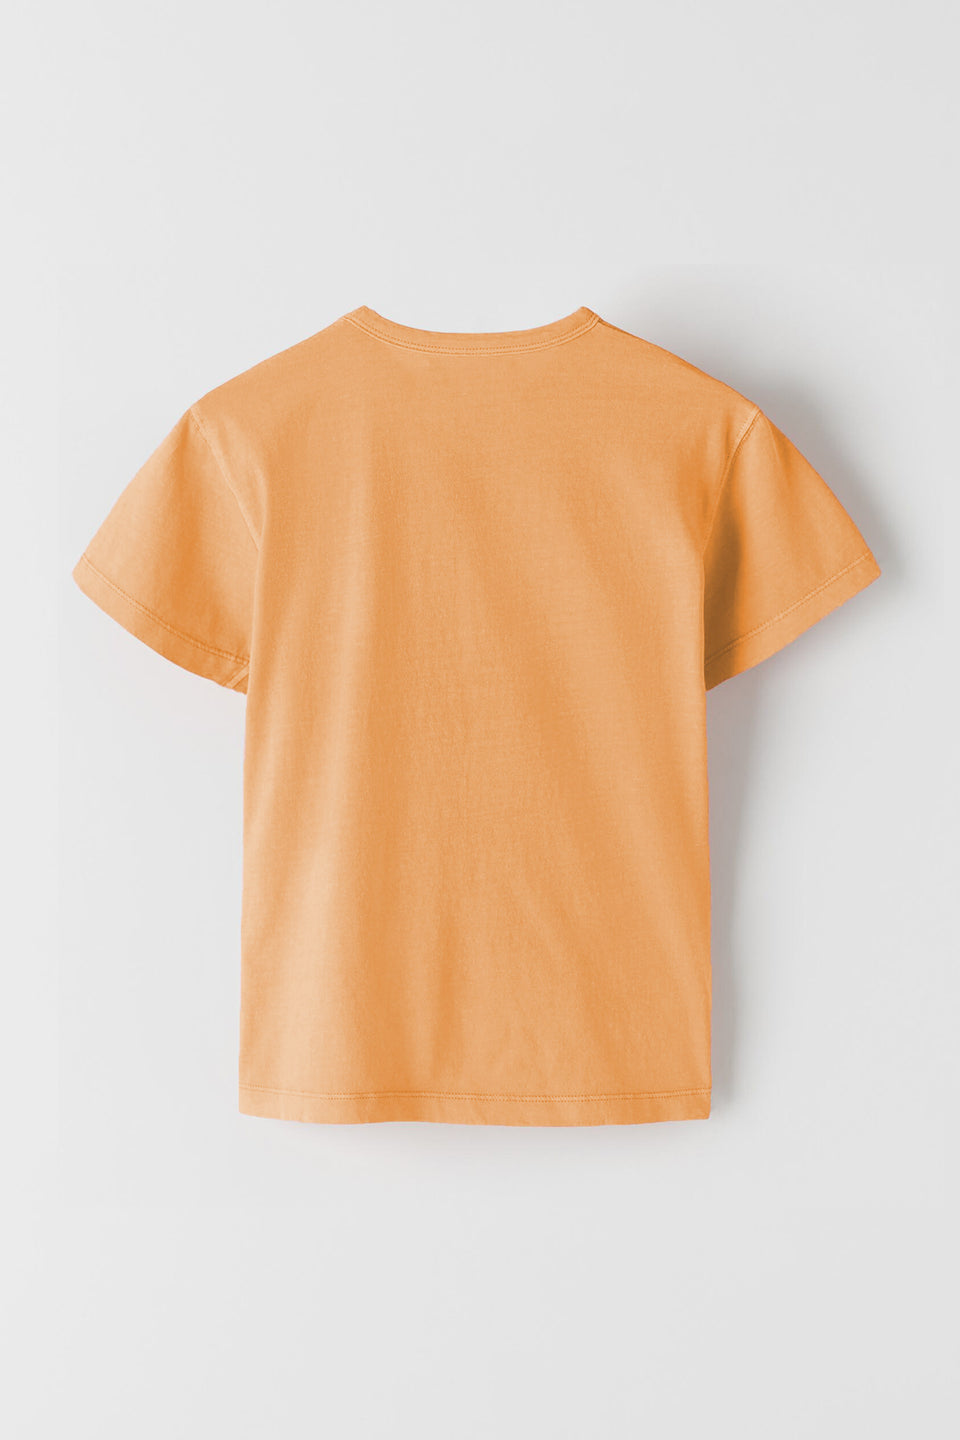 boys solid light orange round neck t-shirt